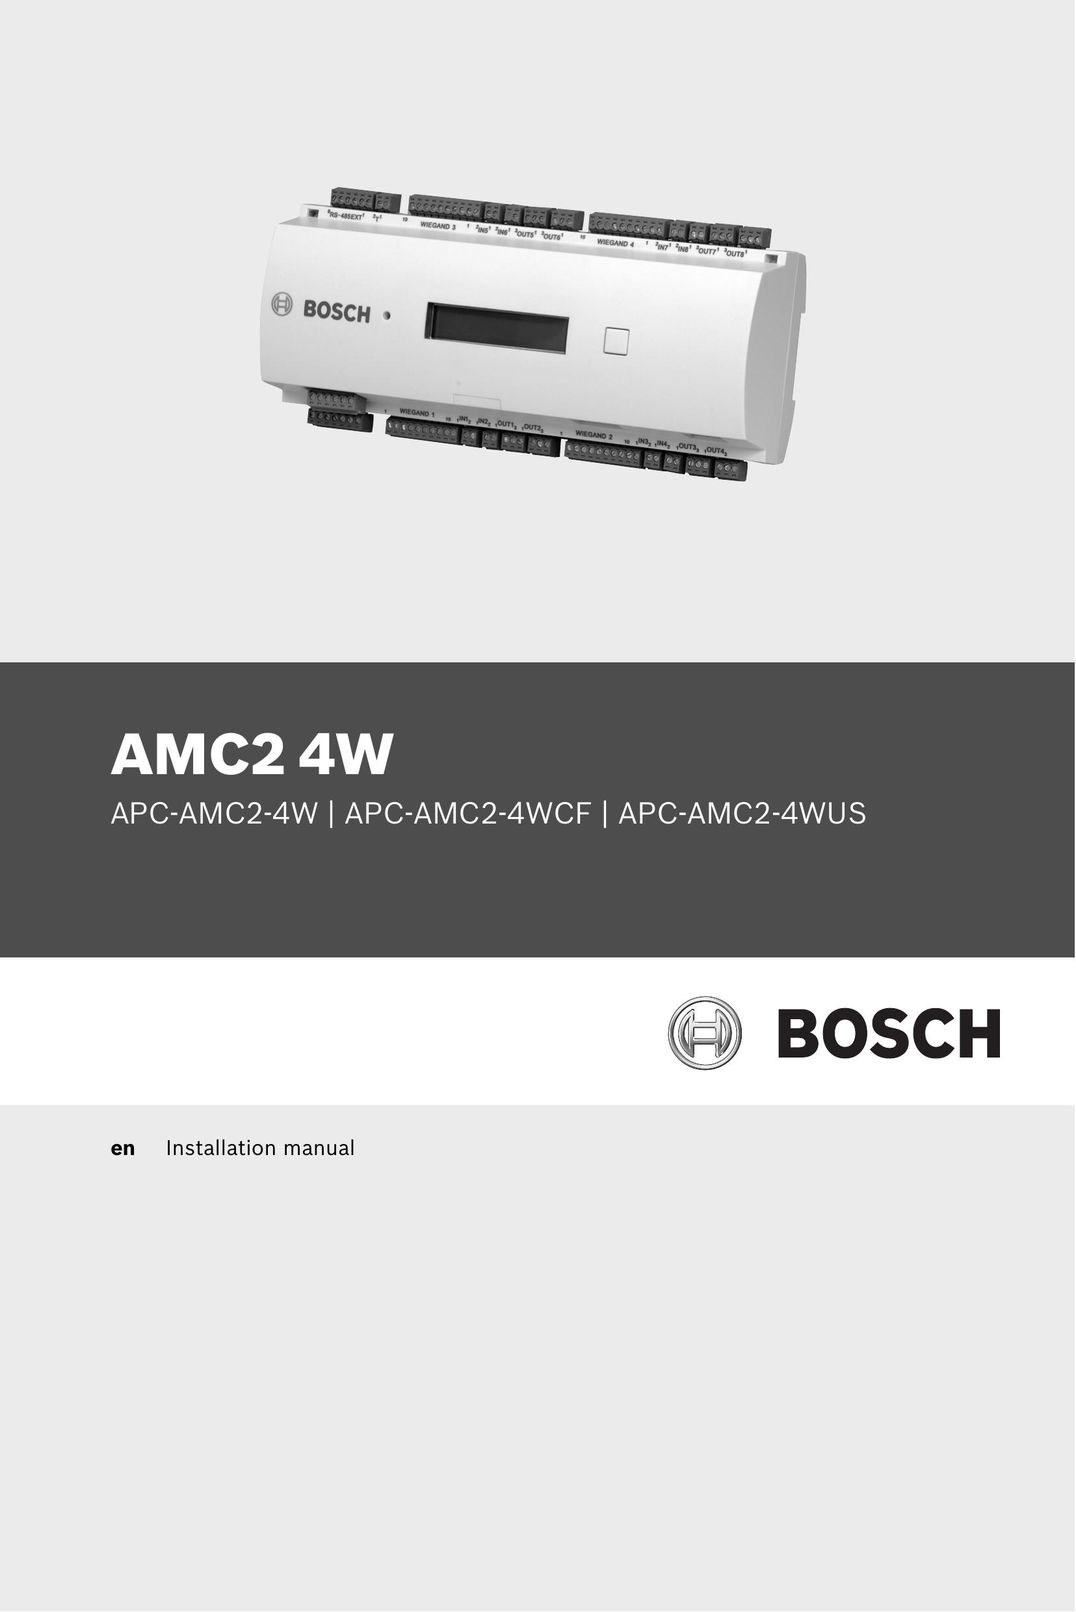 Bosch Appliances APC-AMC2-4WCF Home Security System User Manual